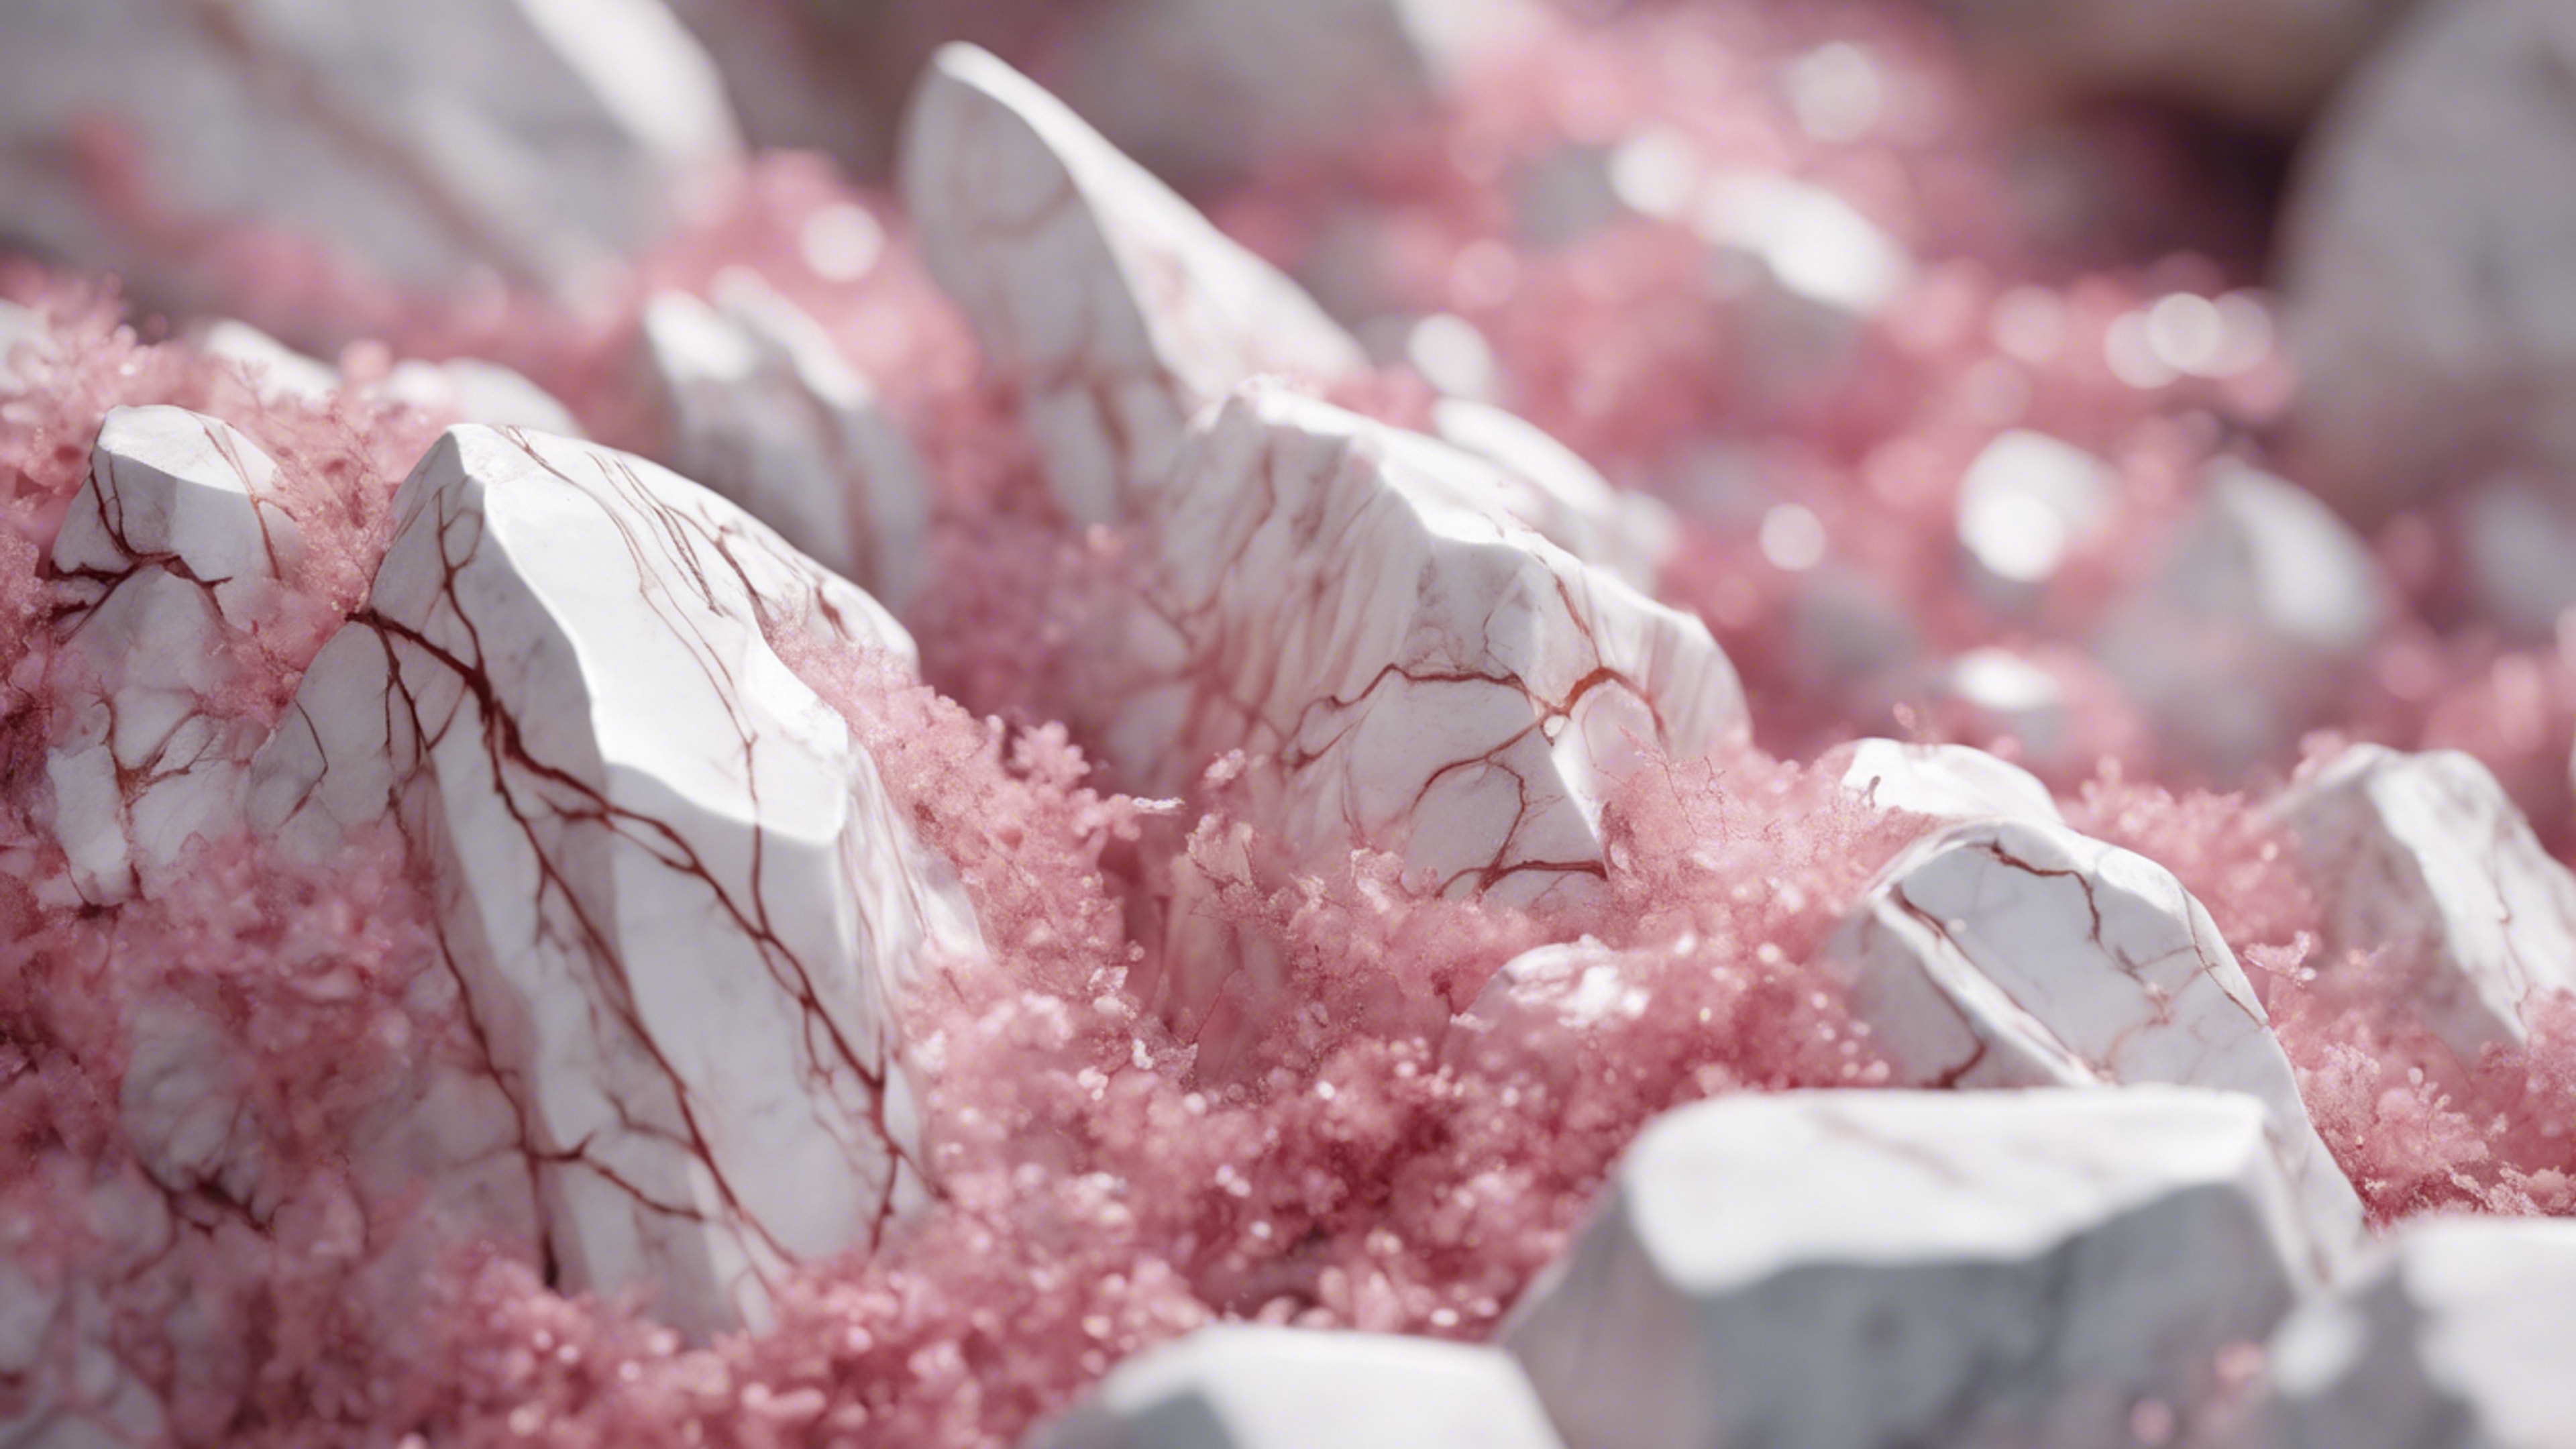 Pink and white veins running through marble rocks. Tapeta[3dd5ab4ab8a944e2820c]